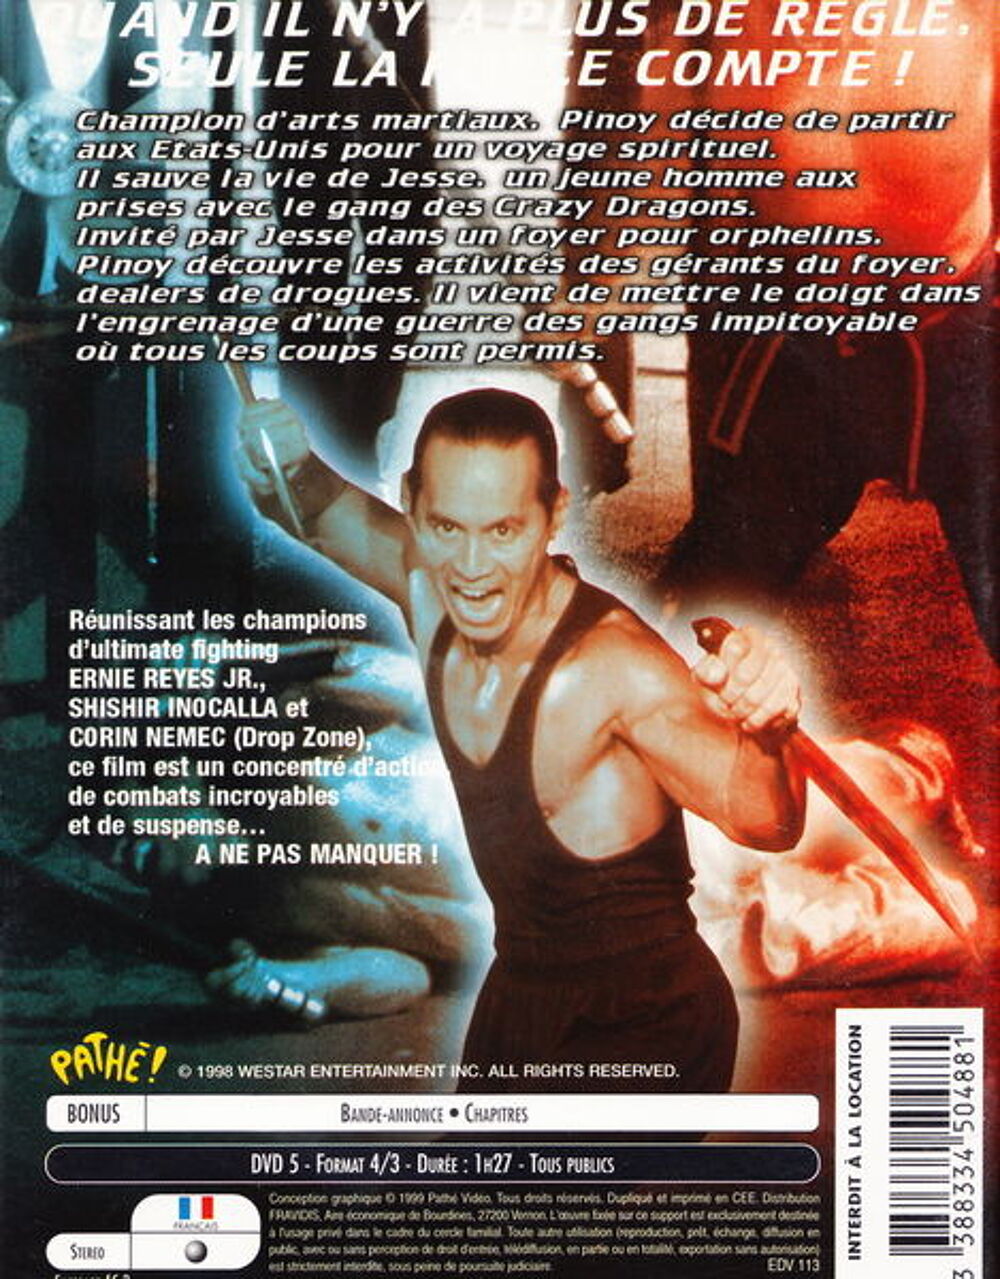 DVD Ultimate fighter
DVD et blu-ray